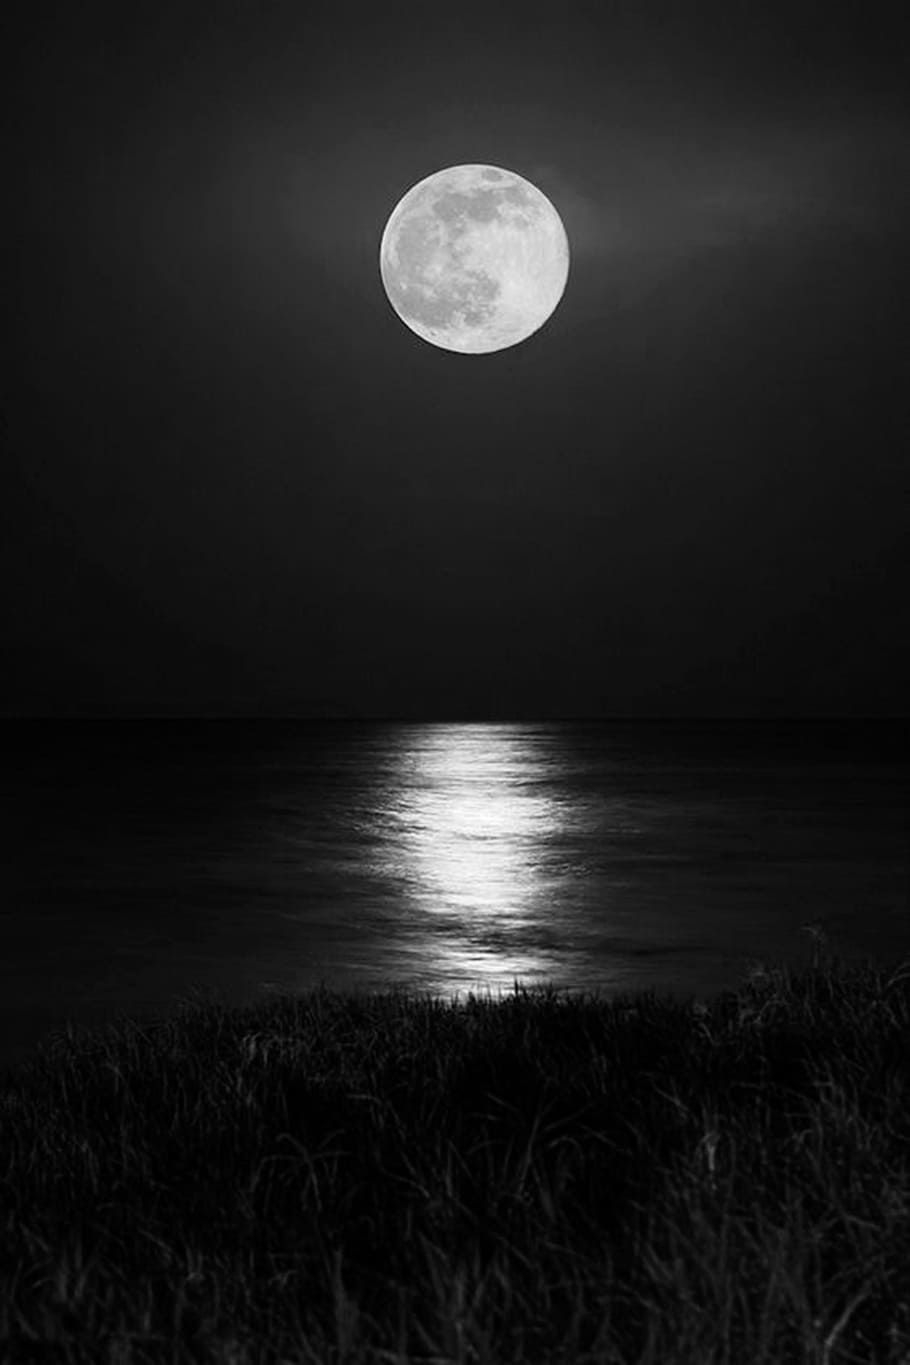 moon, river 2, sky, night, scenics - nature, full moon, water, beauty in nature, sea, nature